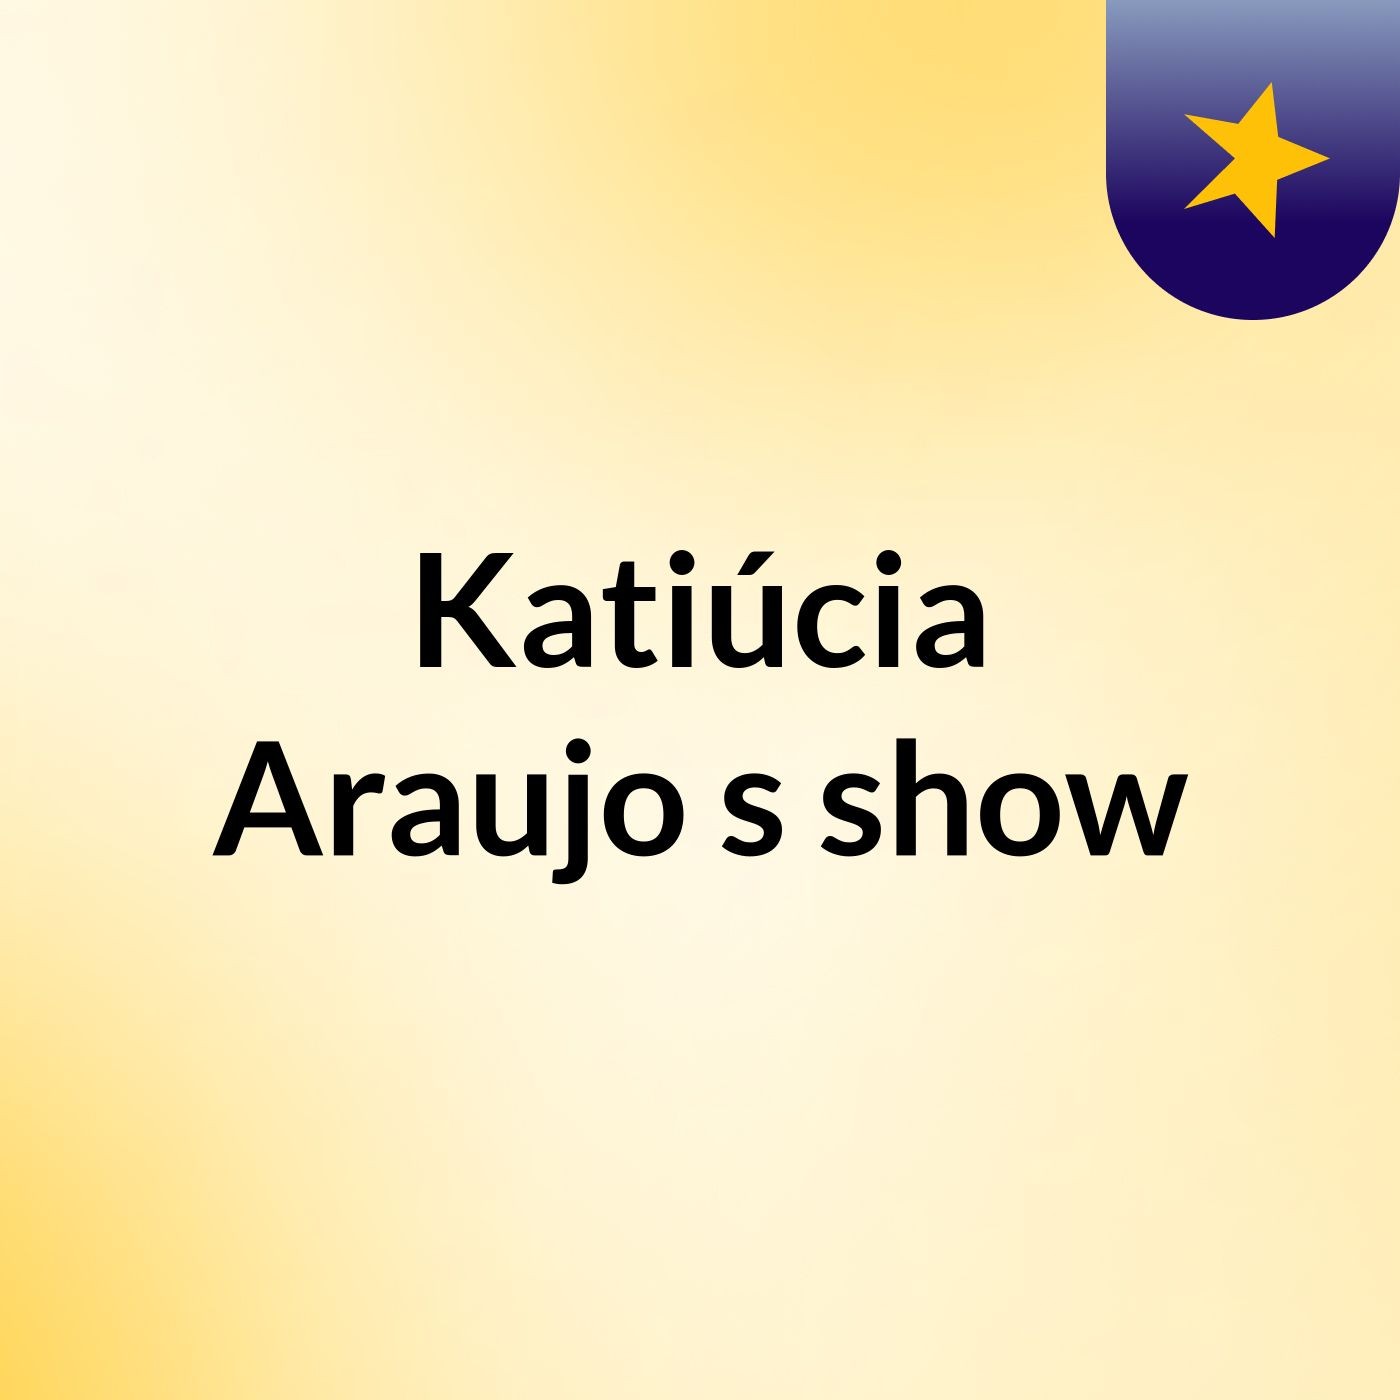 Katiúcia Araujo's show